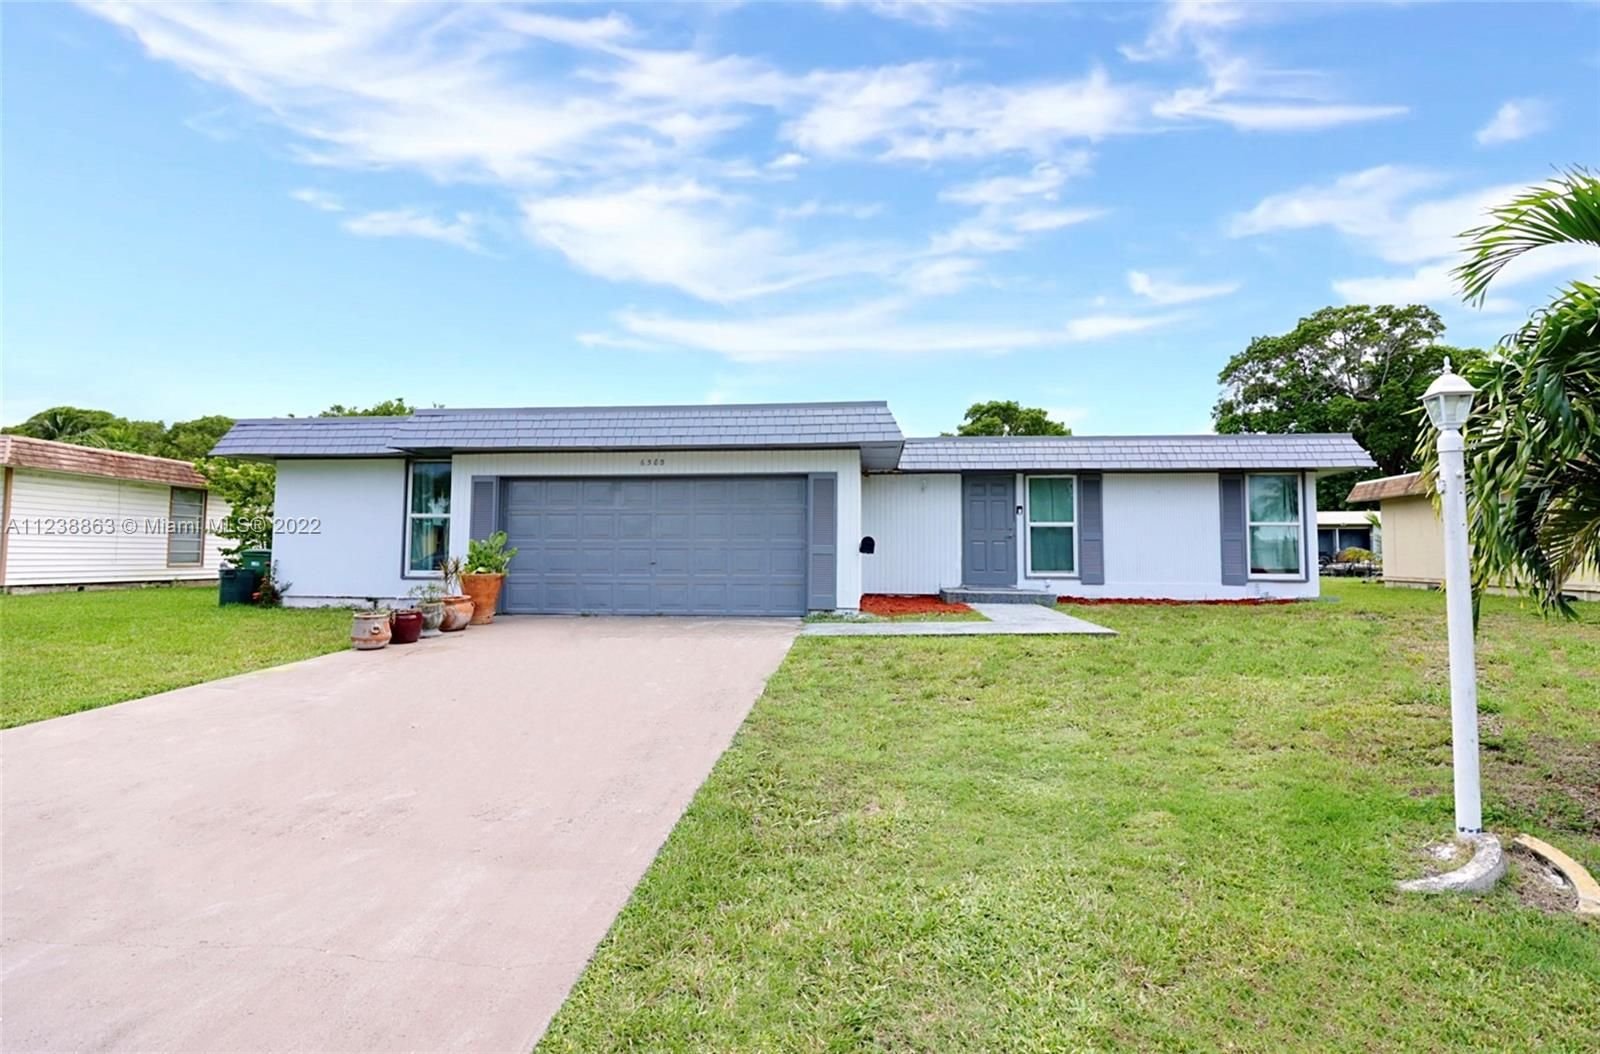 Real estate property located at 6503 72nd Ave, Broward County, Tamarac, FL